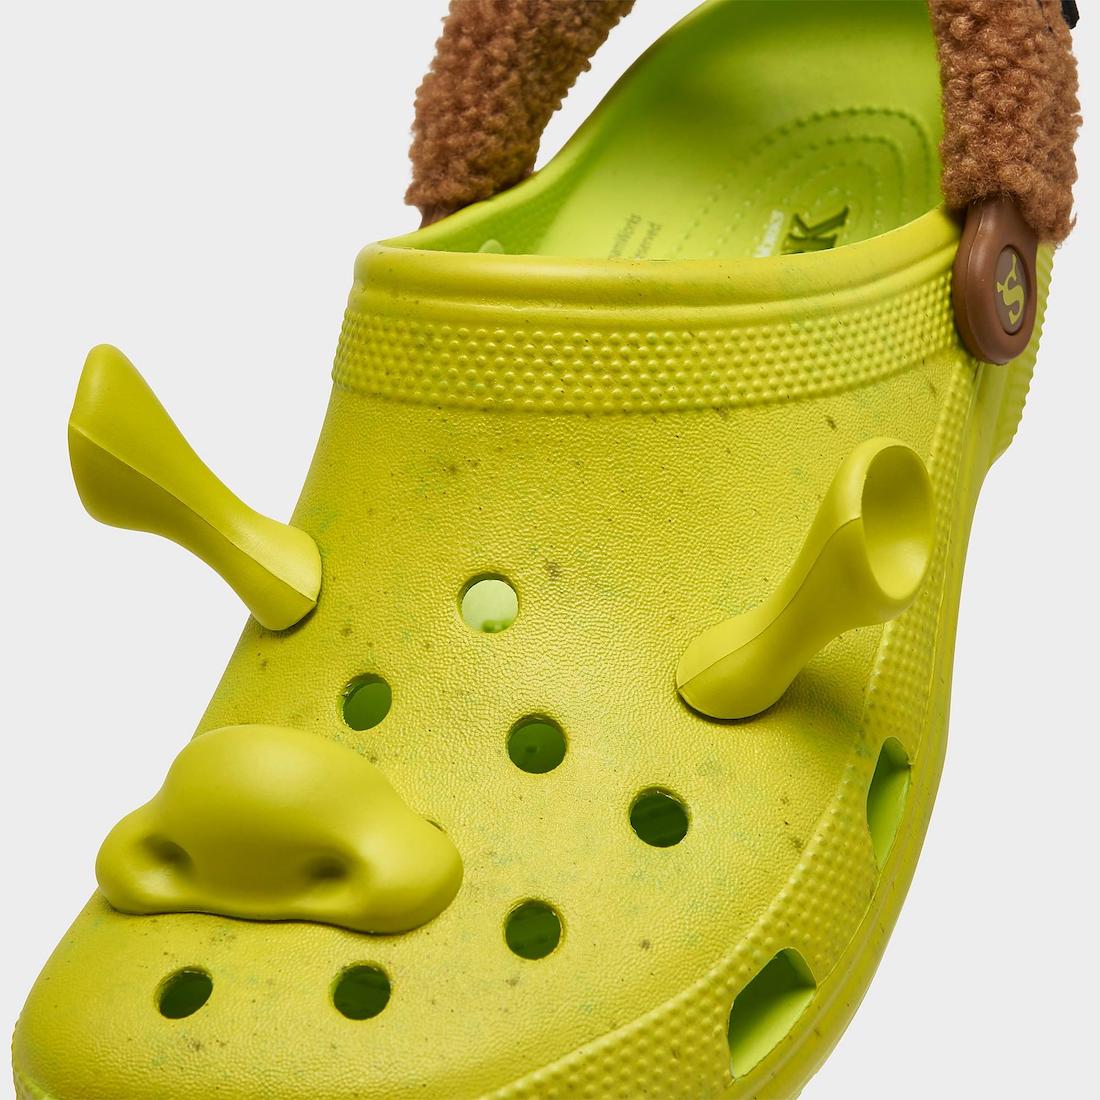 Shrek and Fiona Crocband Crocs Clog Shoes - LIMITED EDITION